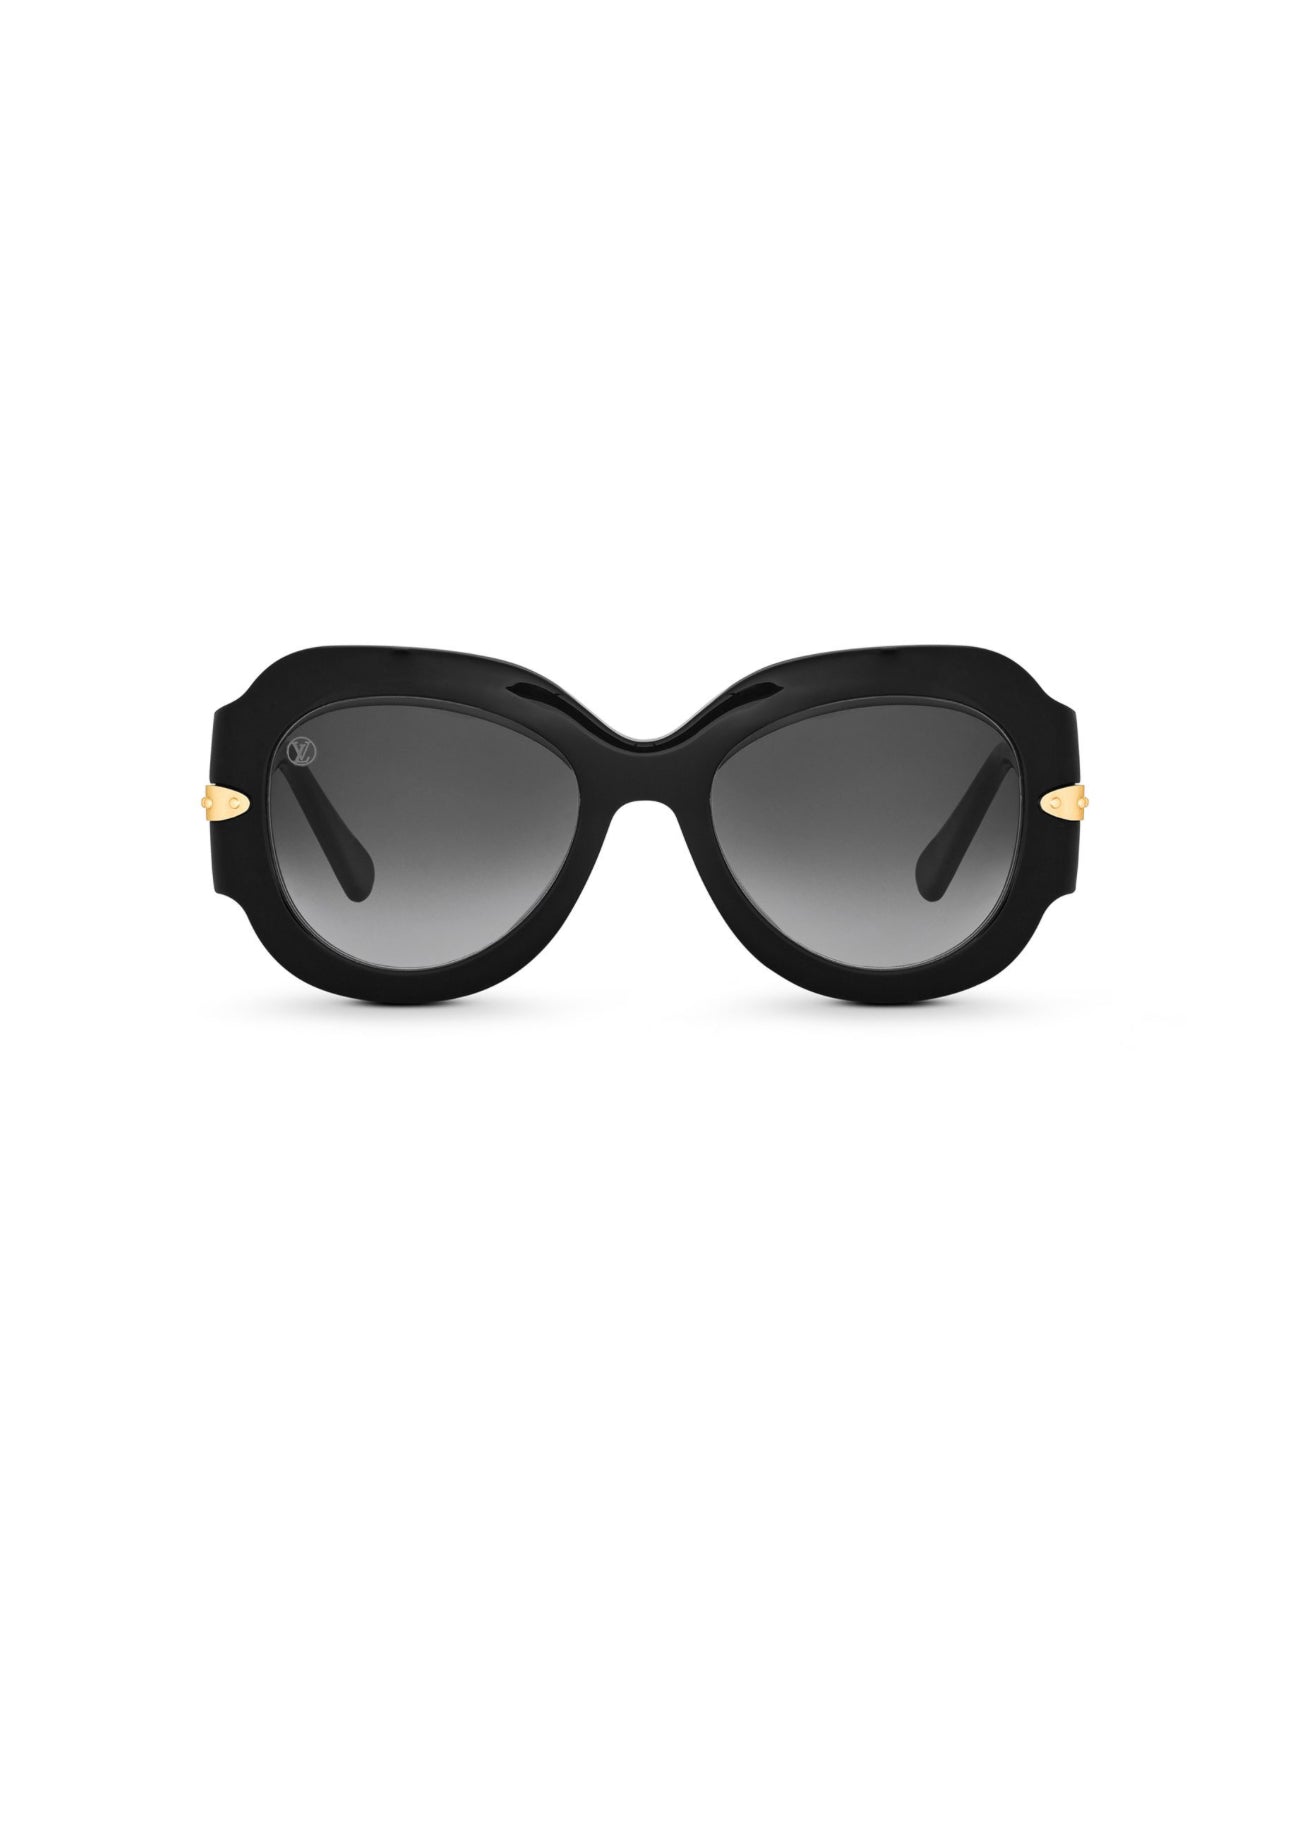 Închiriere ochelari de soare - Louis Vuitton - Paris Texas